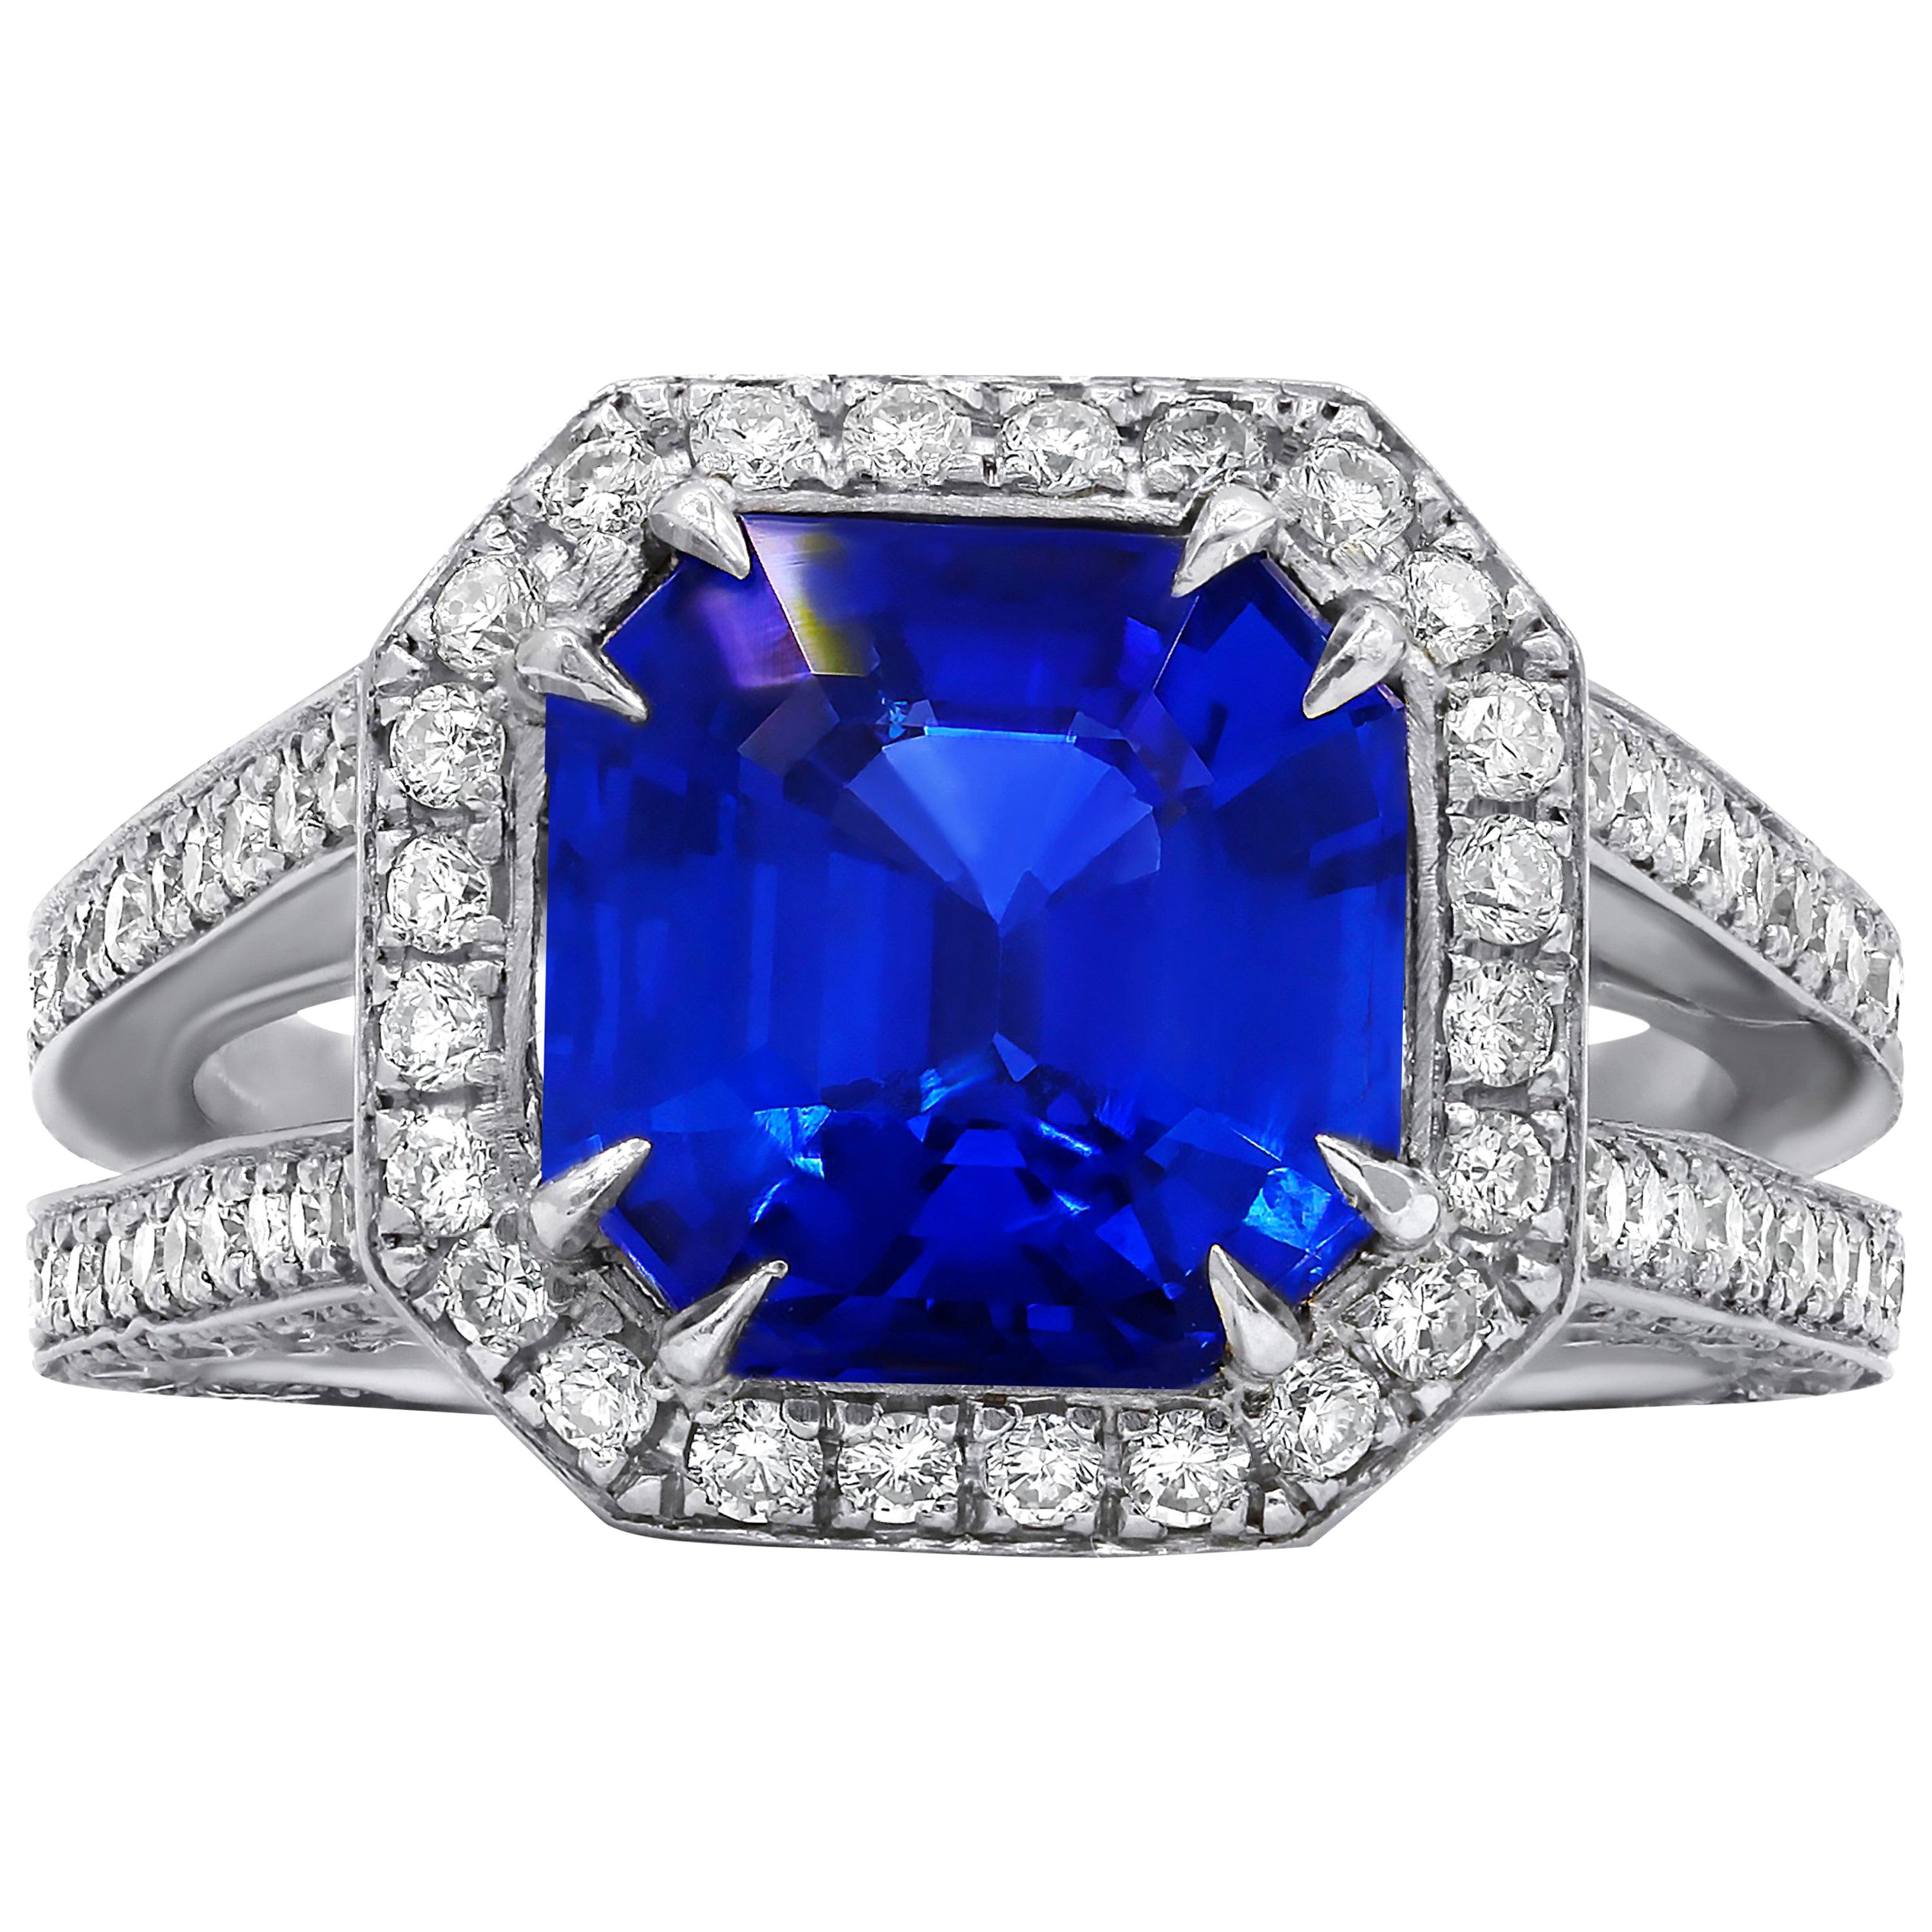 Certified 3.98 Carat Ceylon Sapphire and Diamond Ring